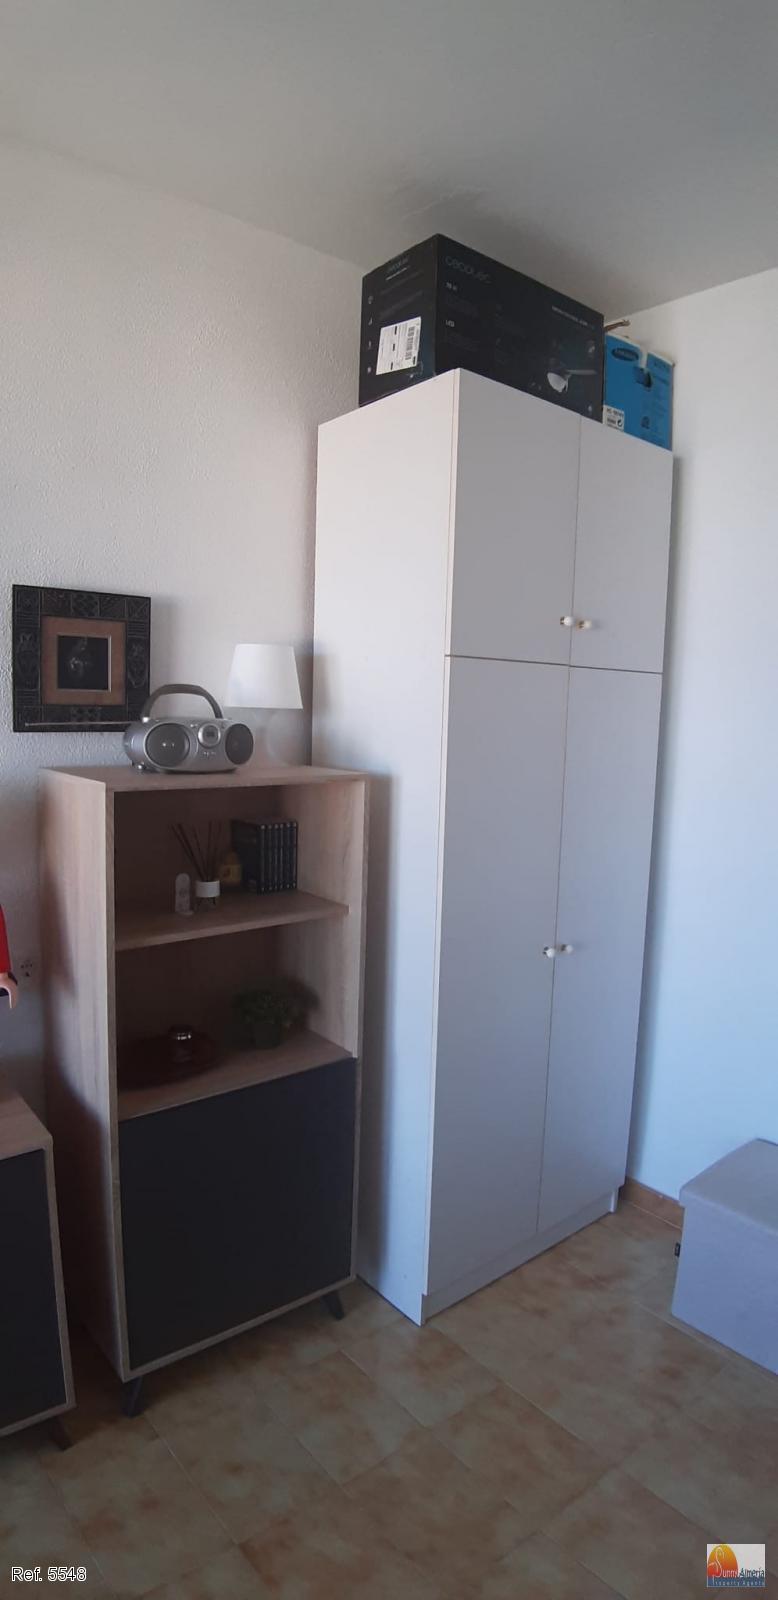 Studio Flat for rent in Avenida las Gaviotas   19 (Roquetas de Mar), 550 €/month